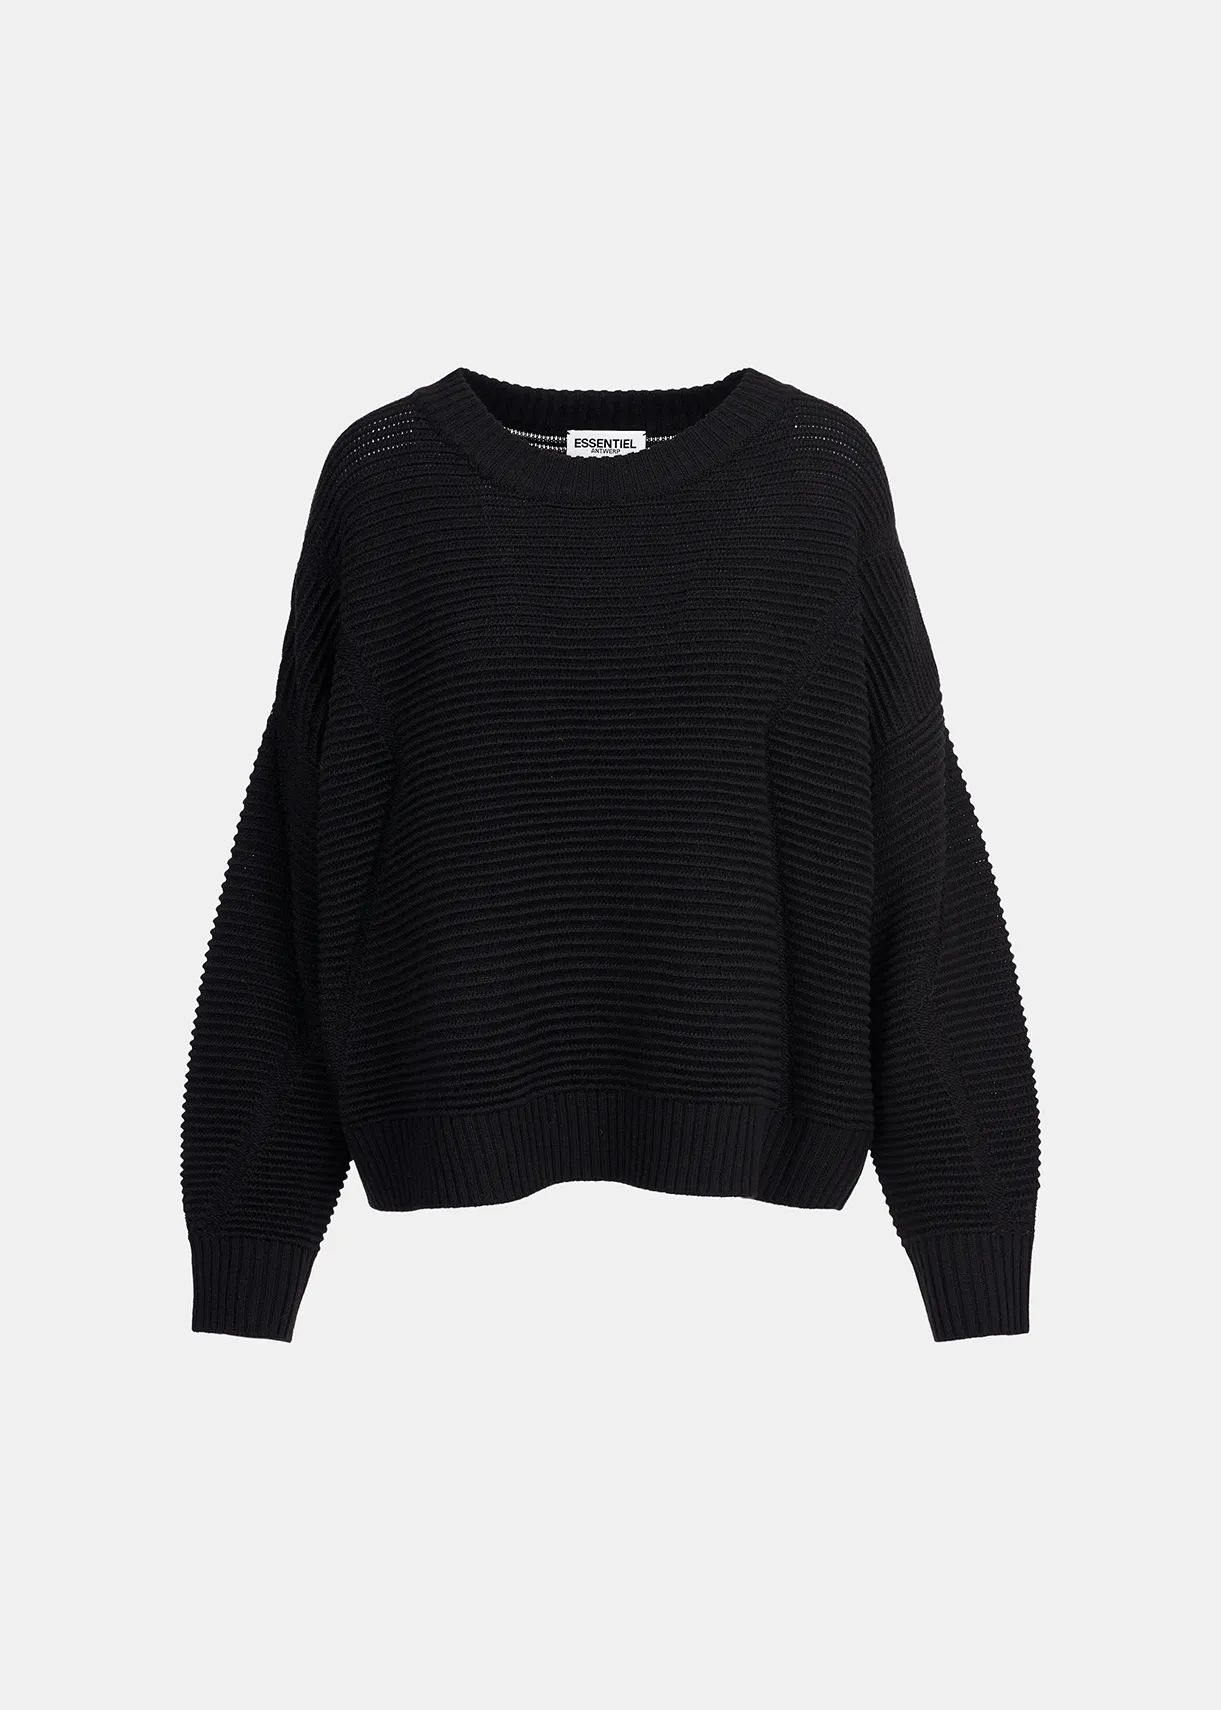 Black rib-knitted sweater